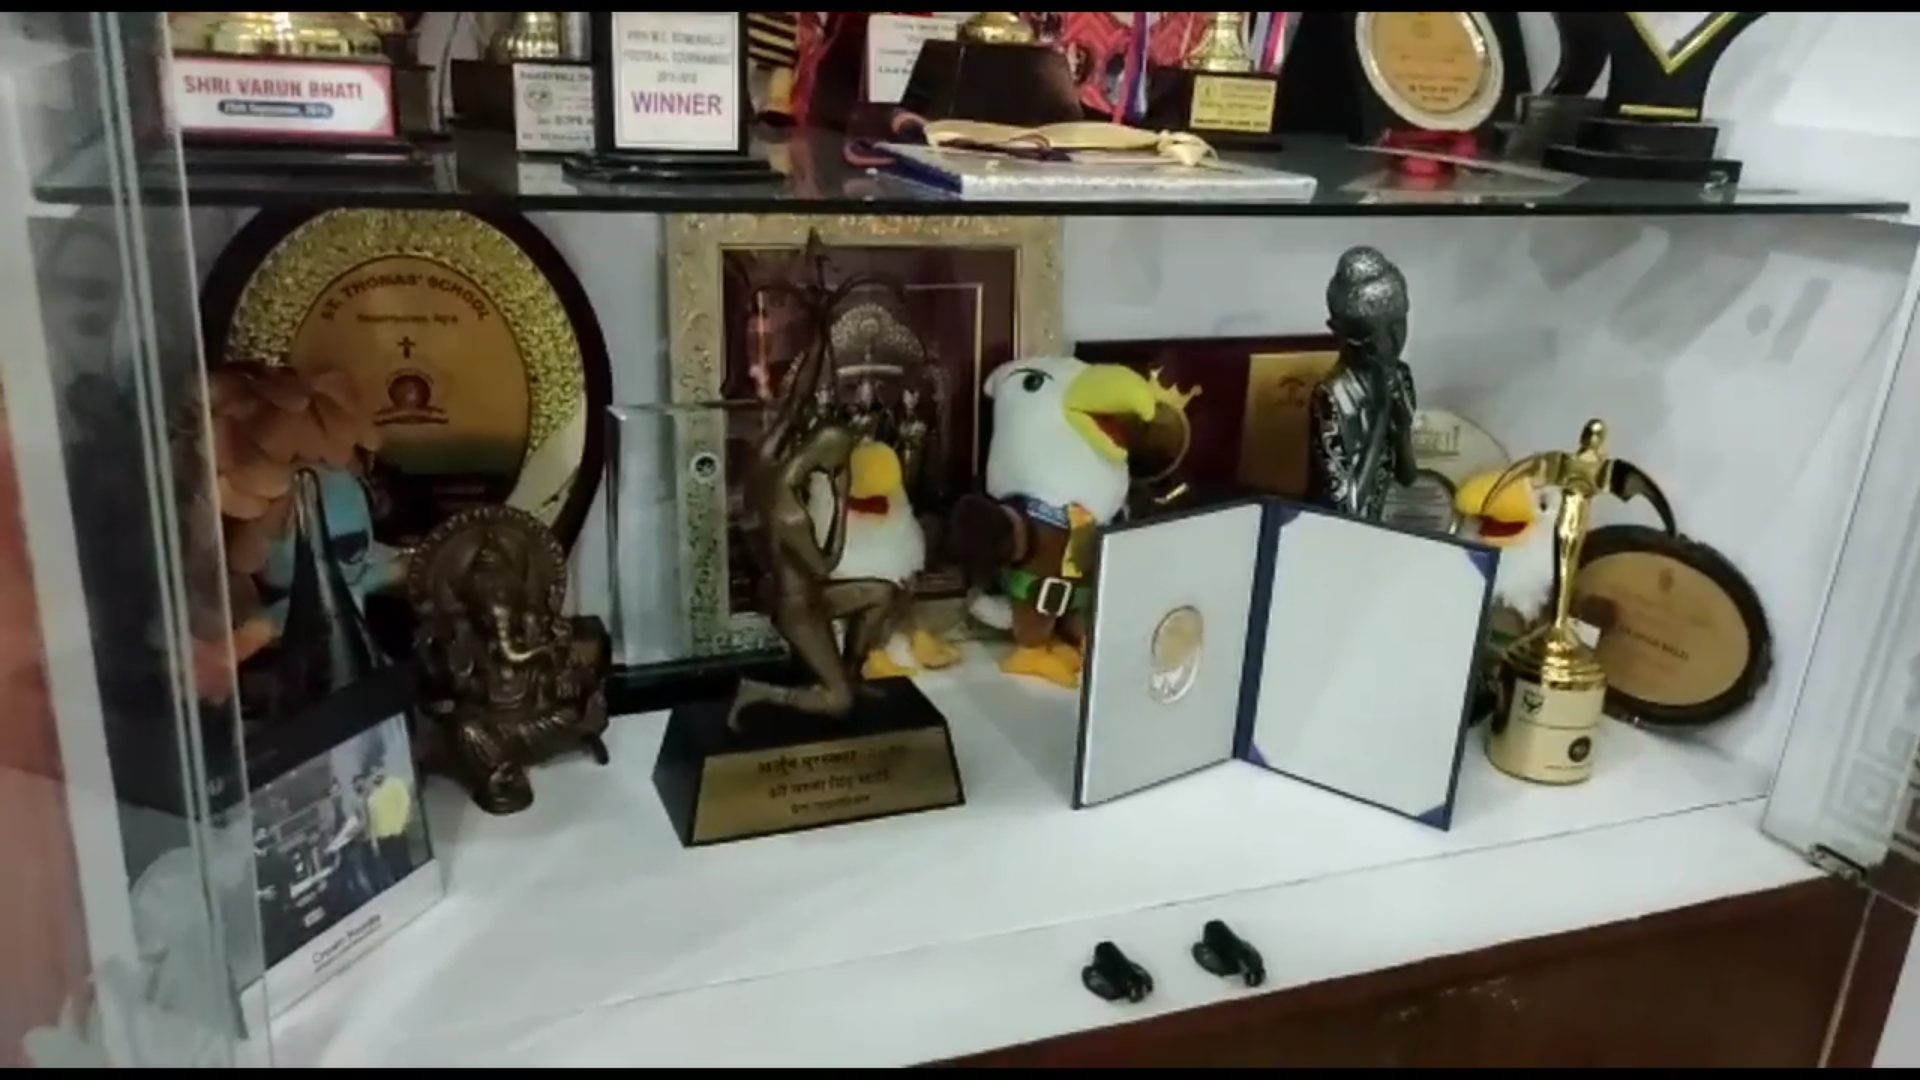 Awards won by Varun Singh Bhati